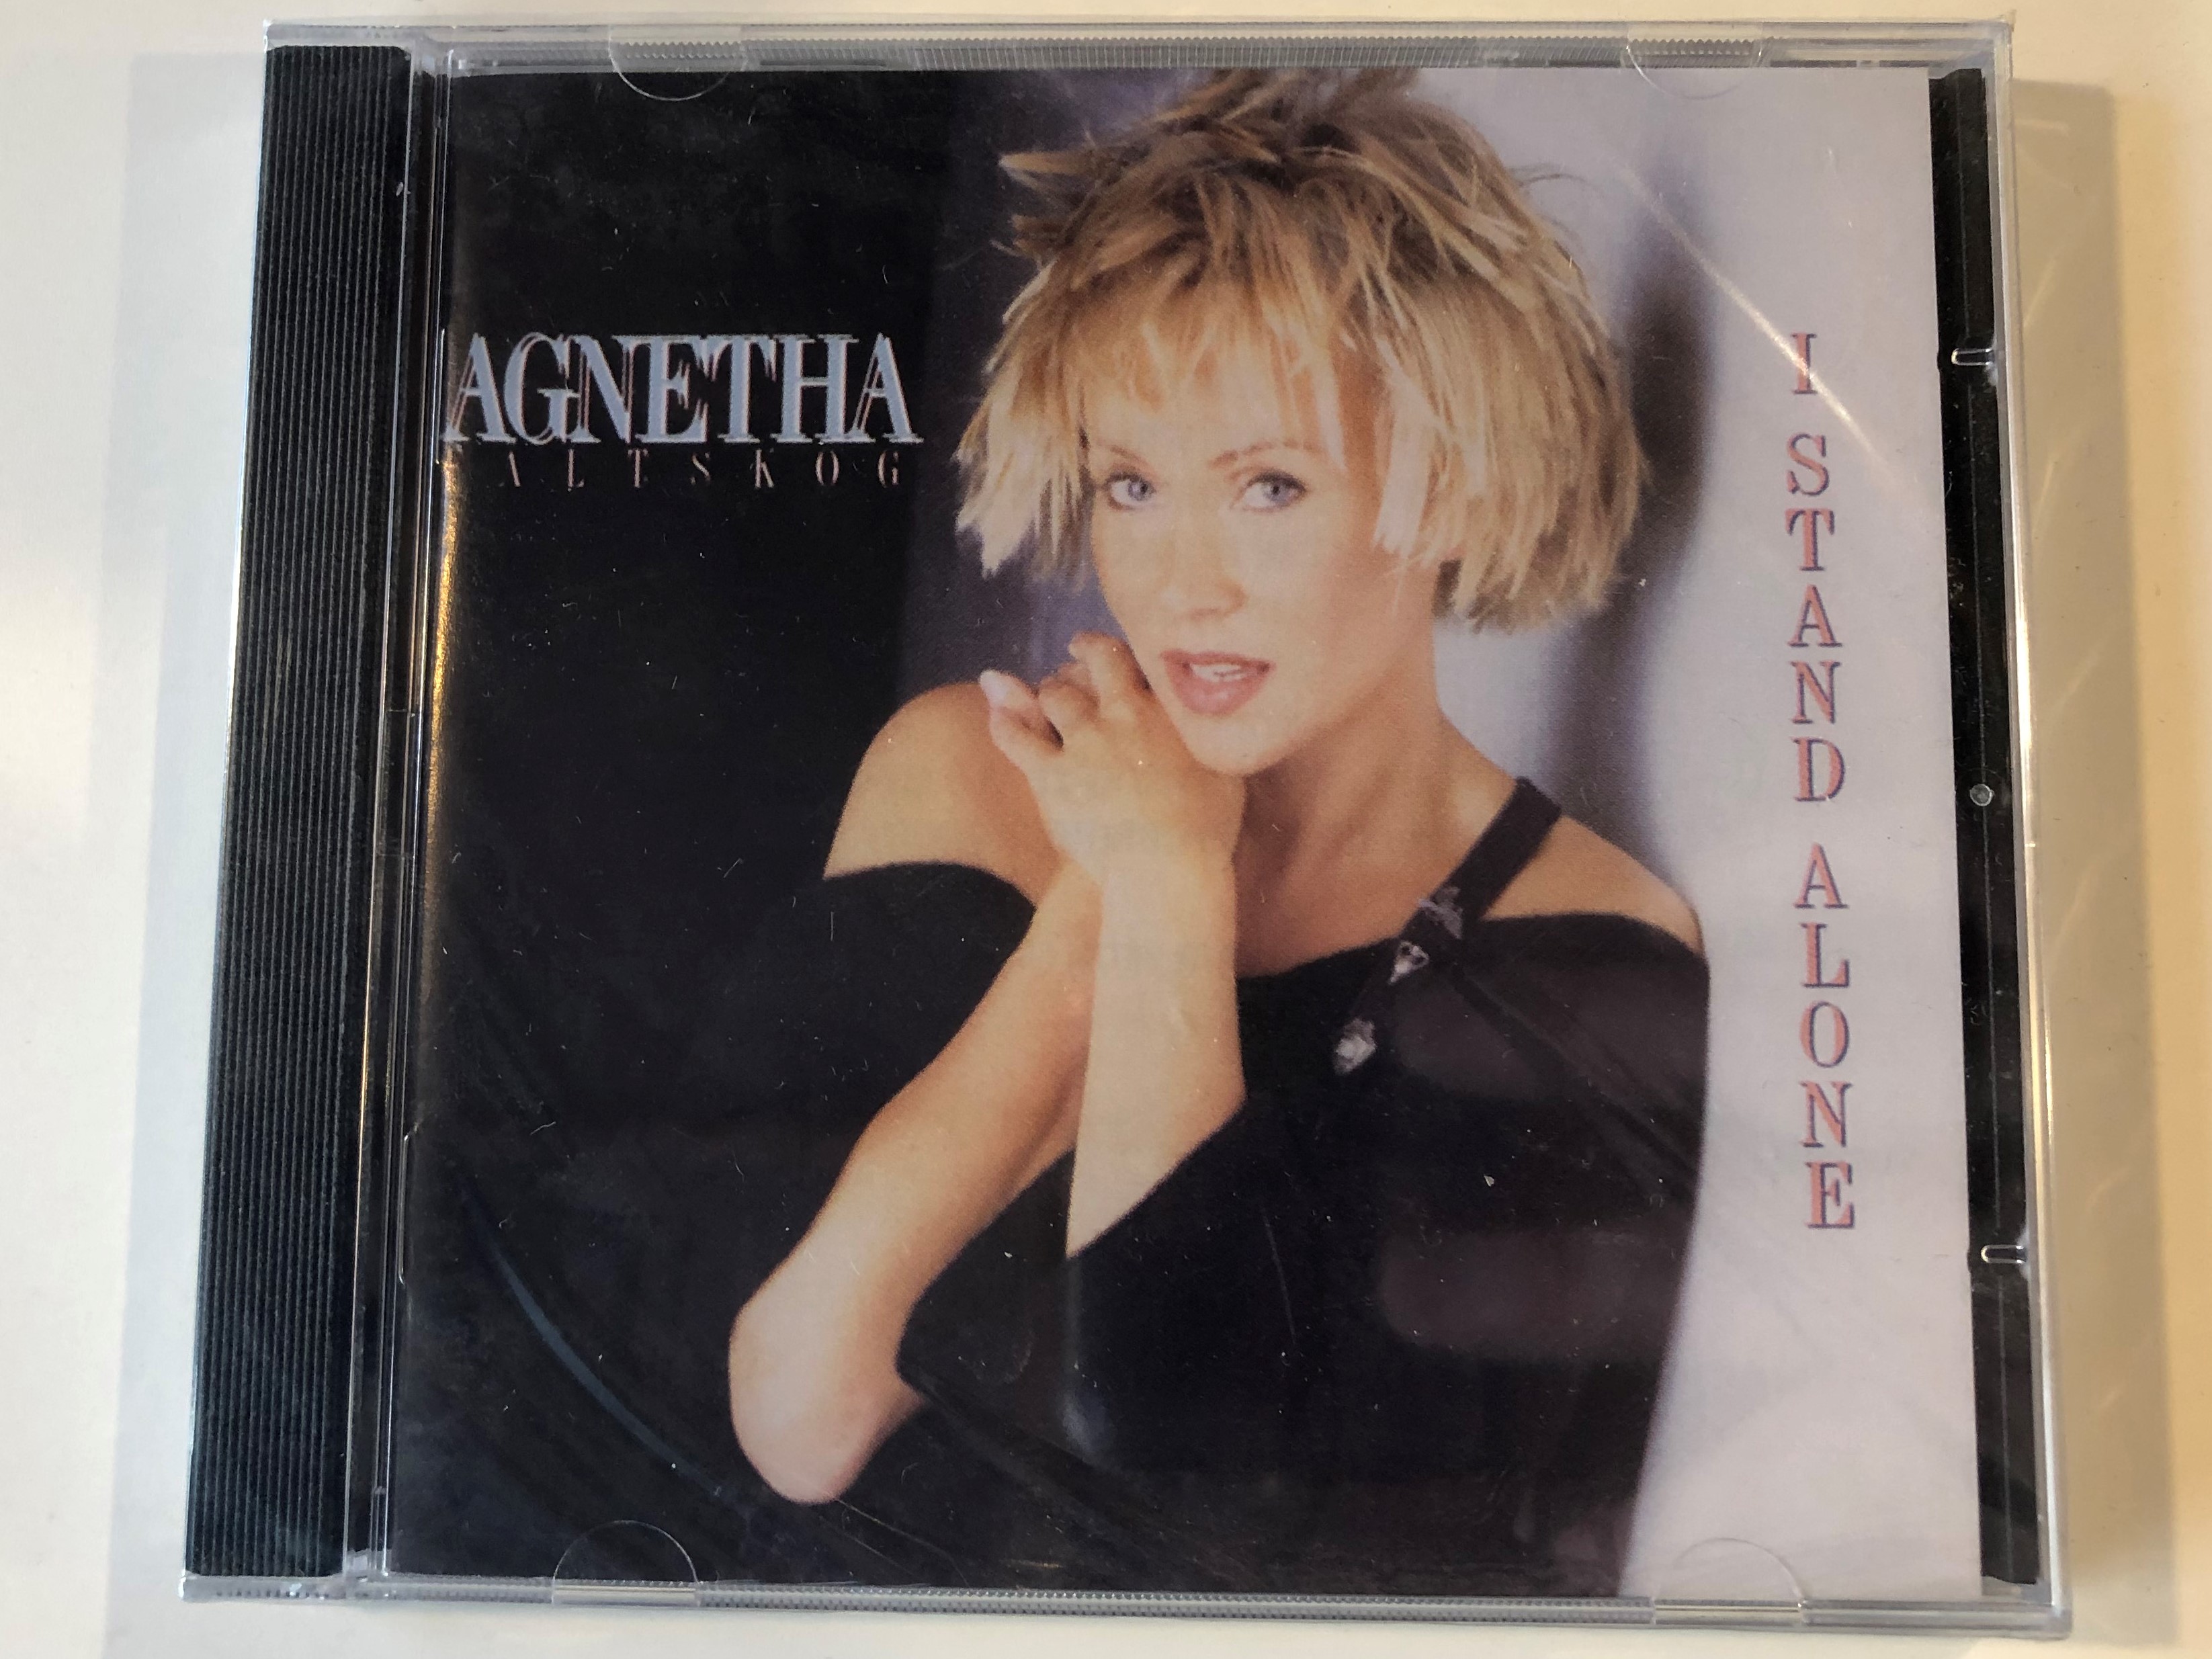 agnetha-f-ltskog-i-stand-alone-wea-audio-cd-1987-242-231-2-1-.jpg